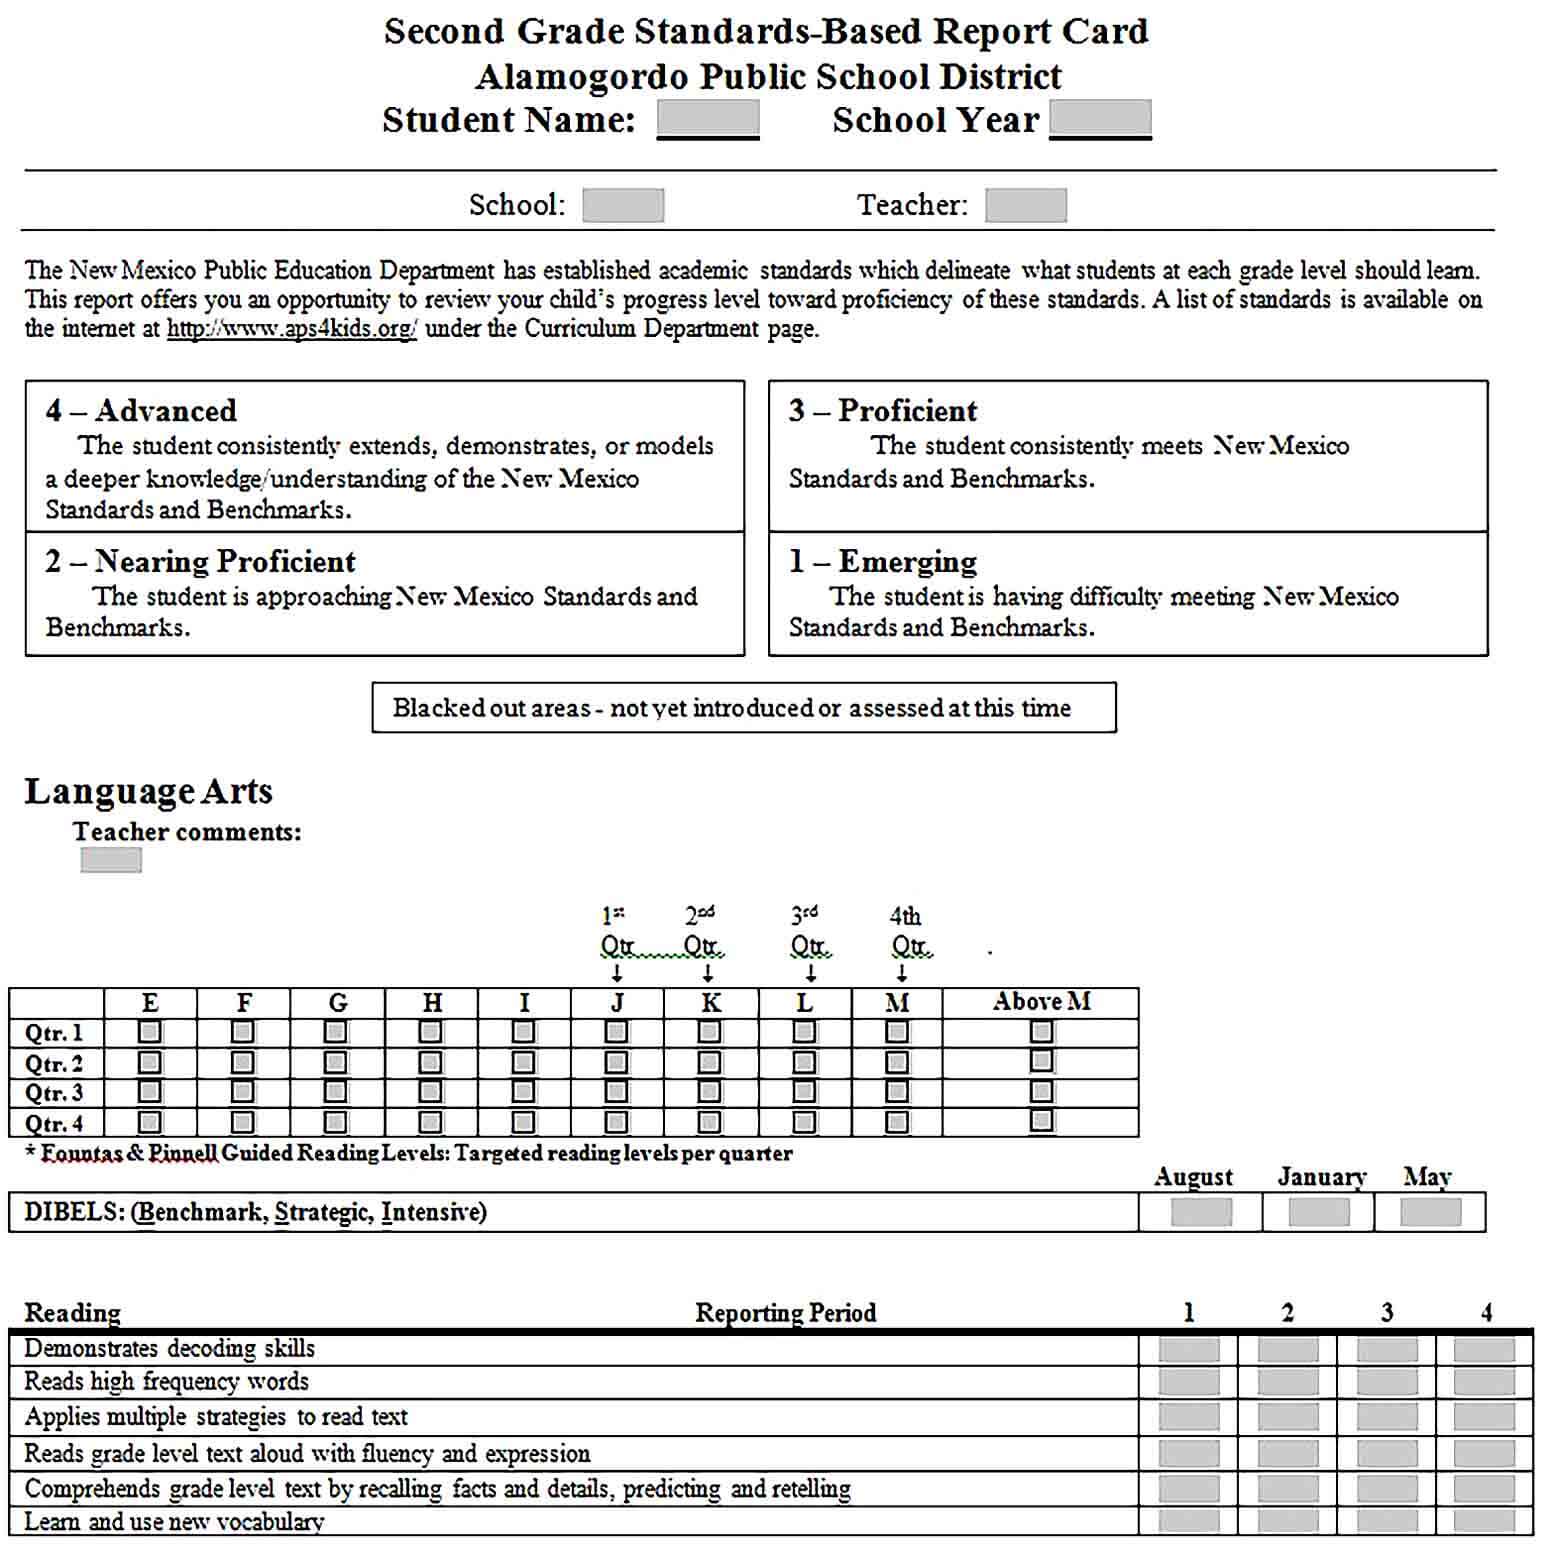 Sample Second Grade Standards Based Report Card Template